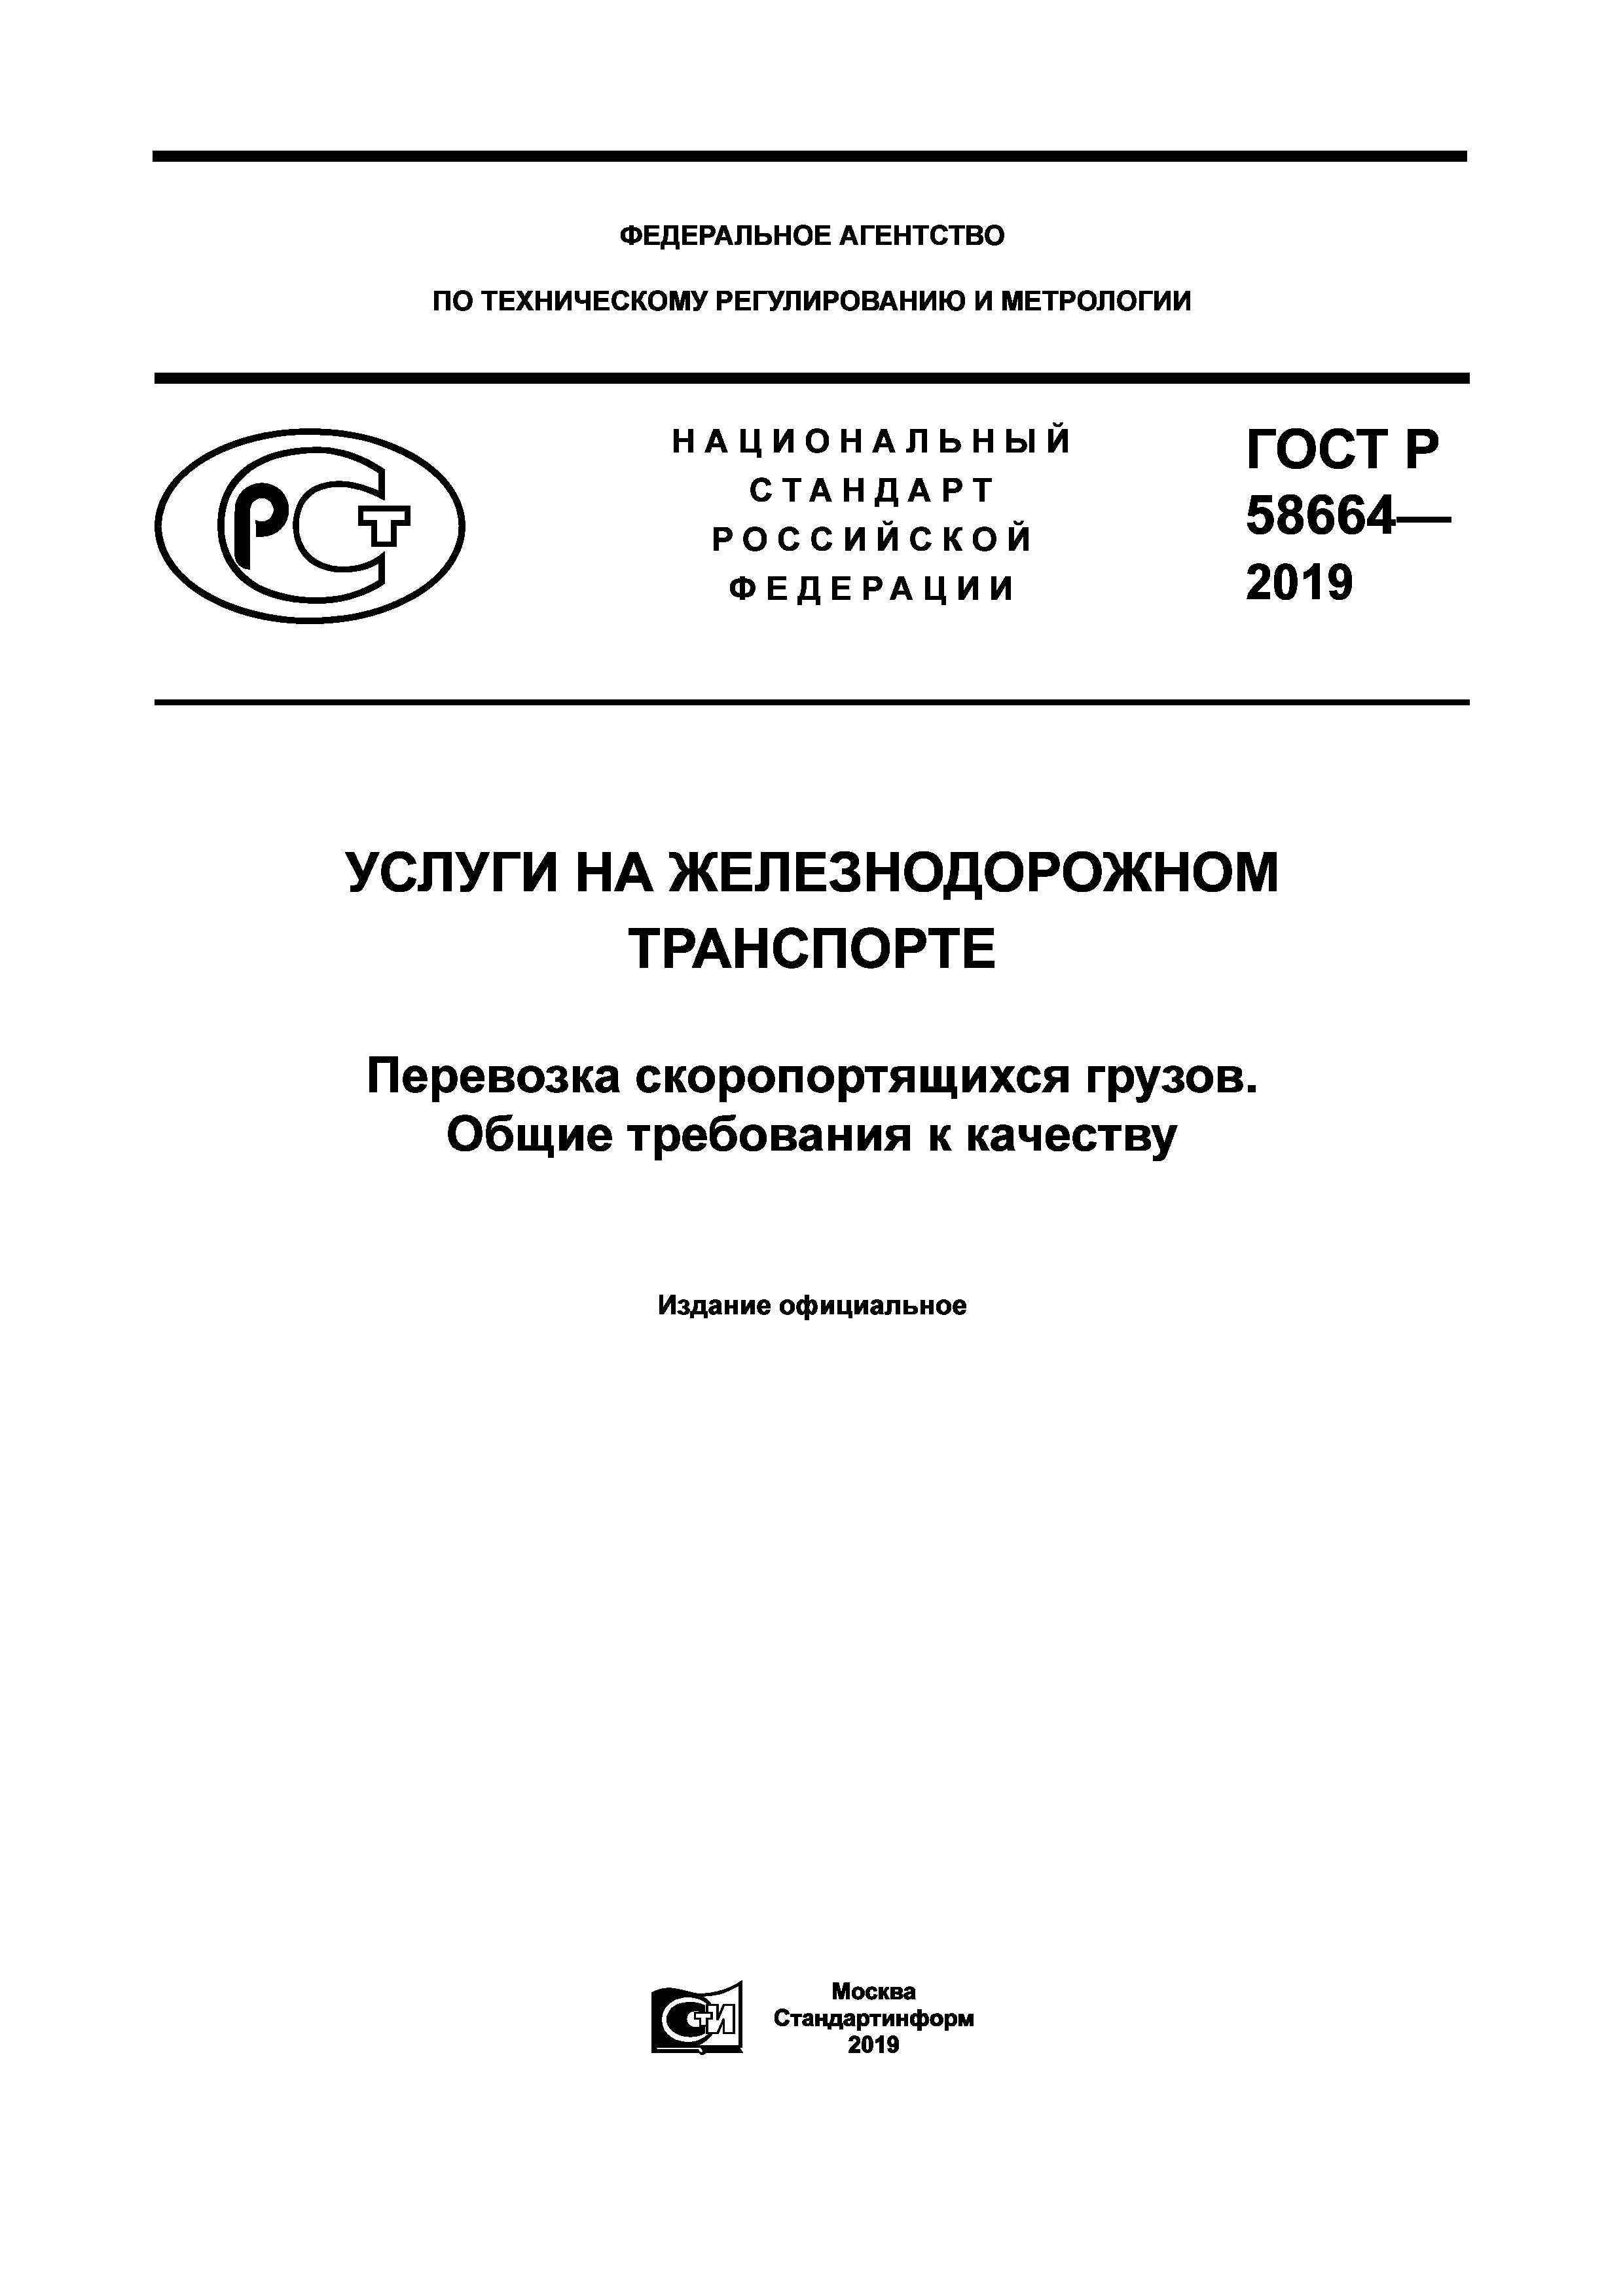 ГОСТ Р 58664-2019